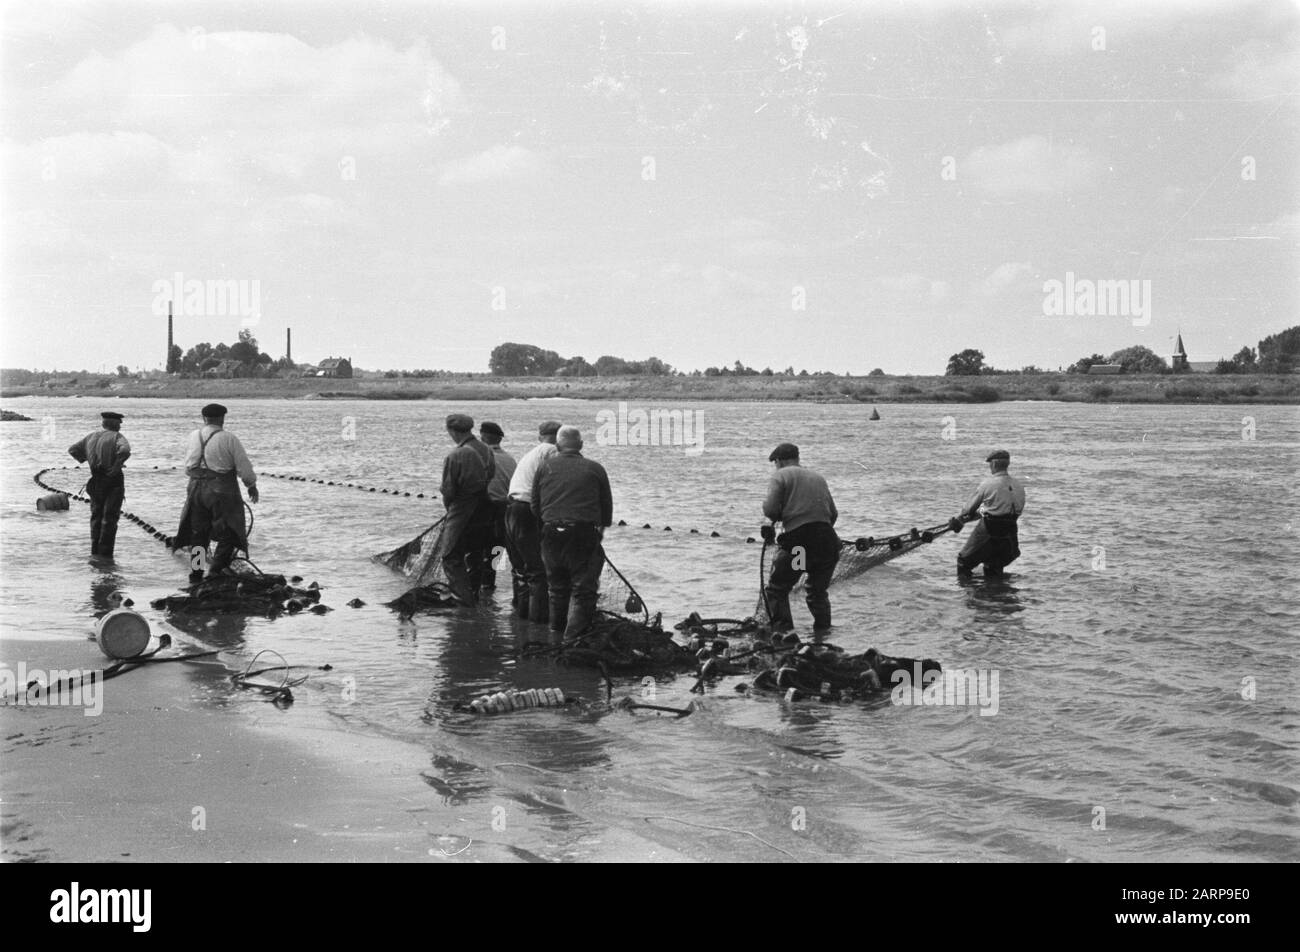 salmon fishing, fishermen, lace seine, quoting Date: July 1949 Keywords: citing, edge seining, fishermen, salmon fishing Stock Photo